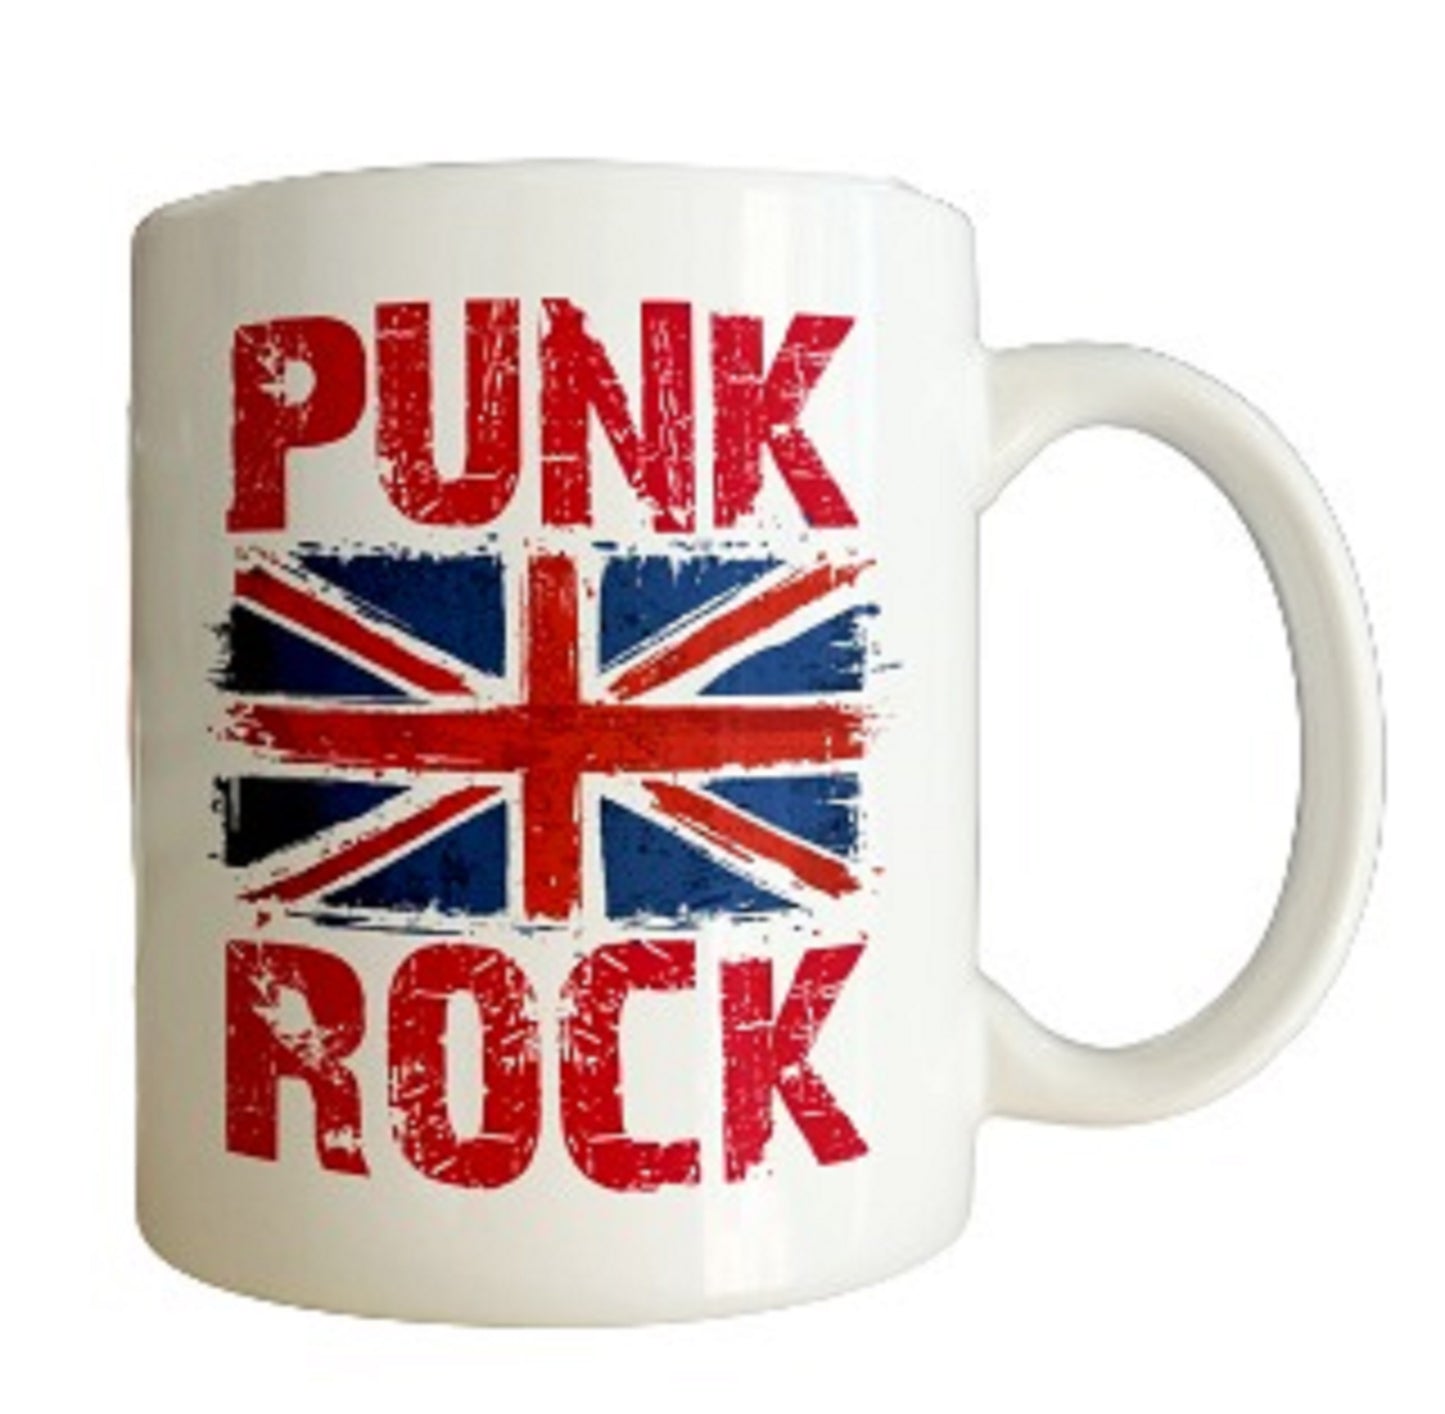  Punk Rock Music & Union Jack Mug by Free Spirit Accessories sold by Free Spirit Accessories